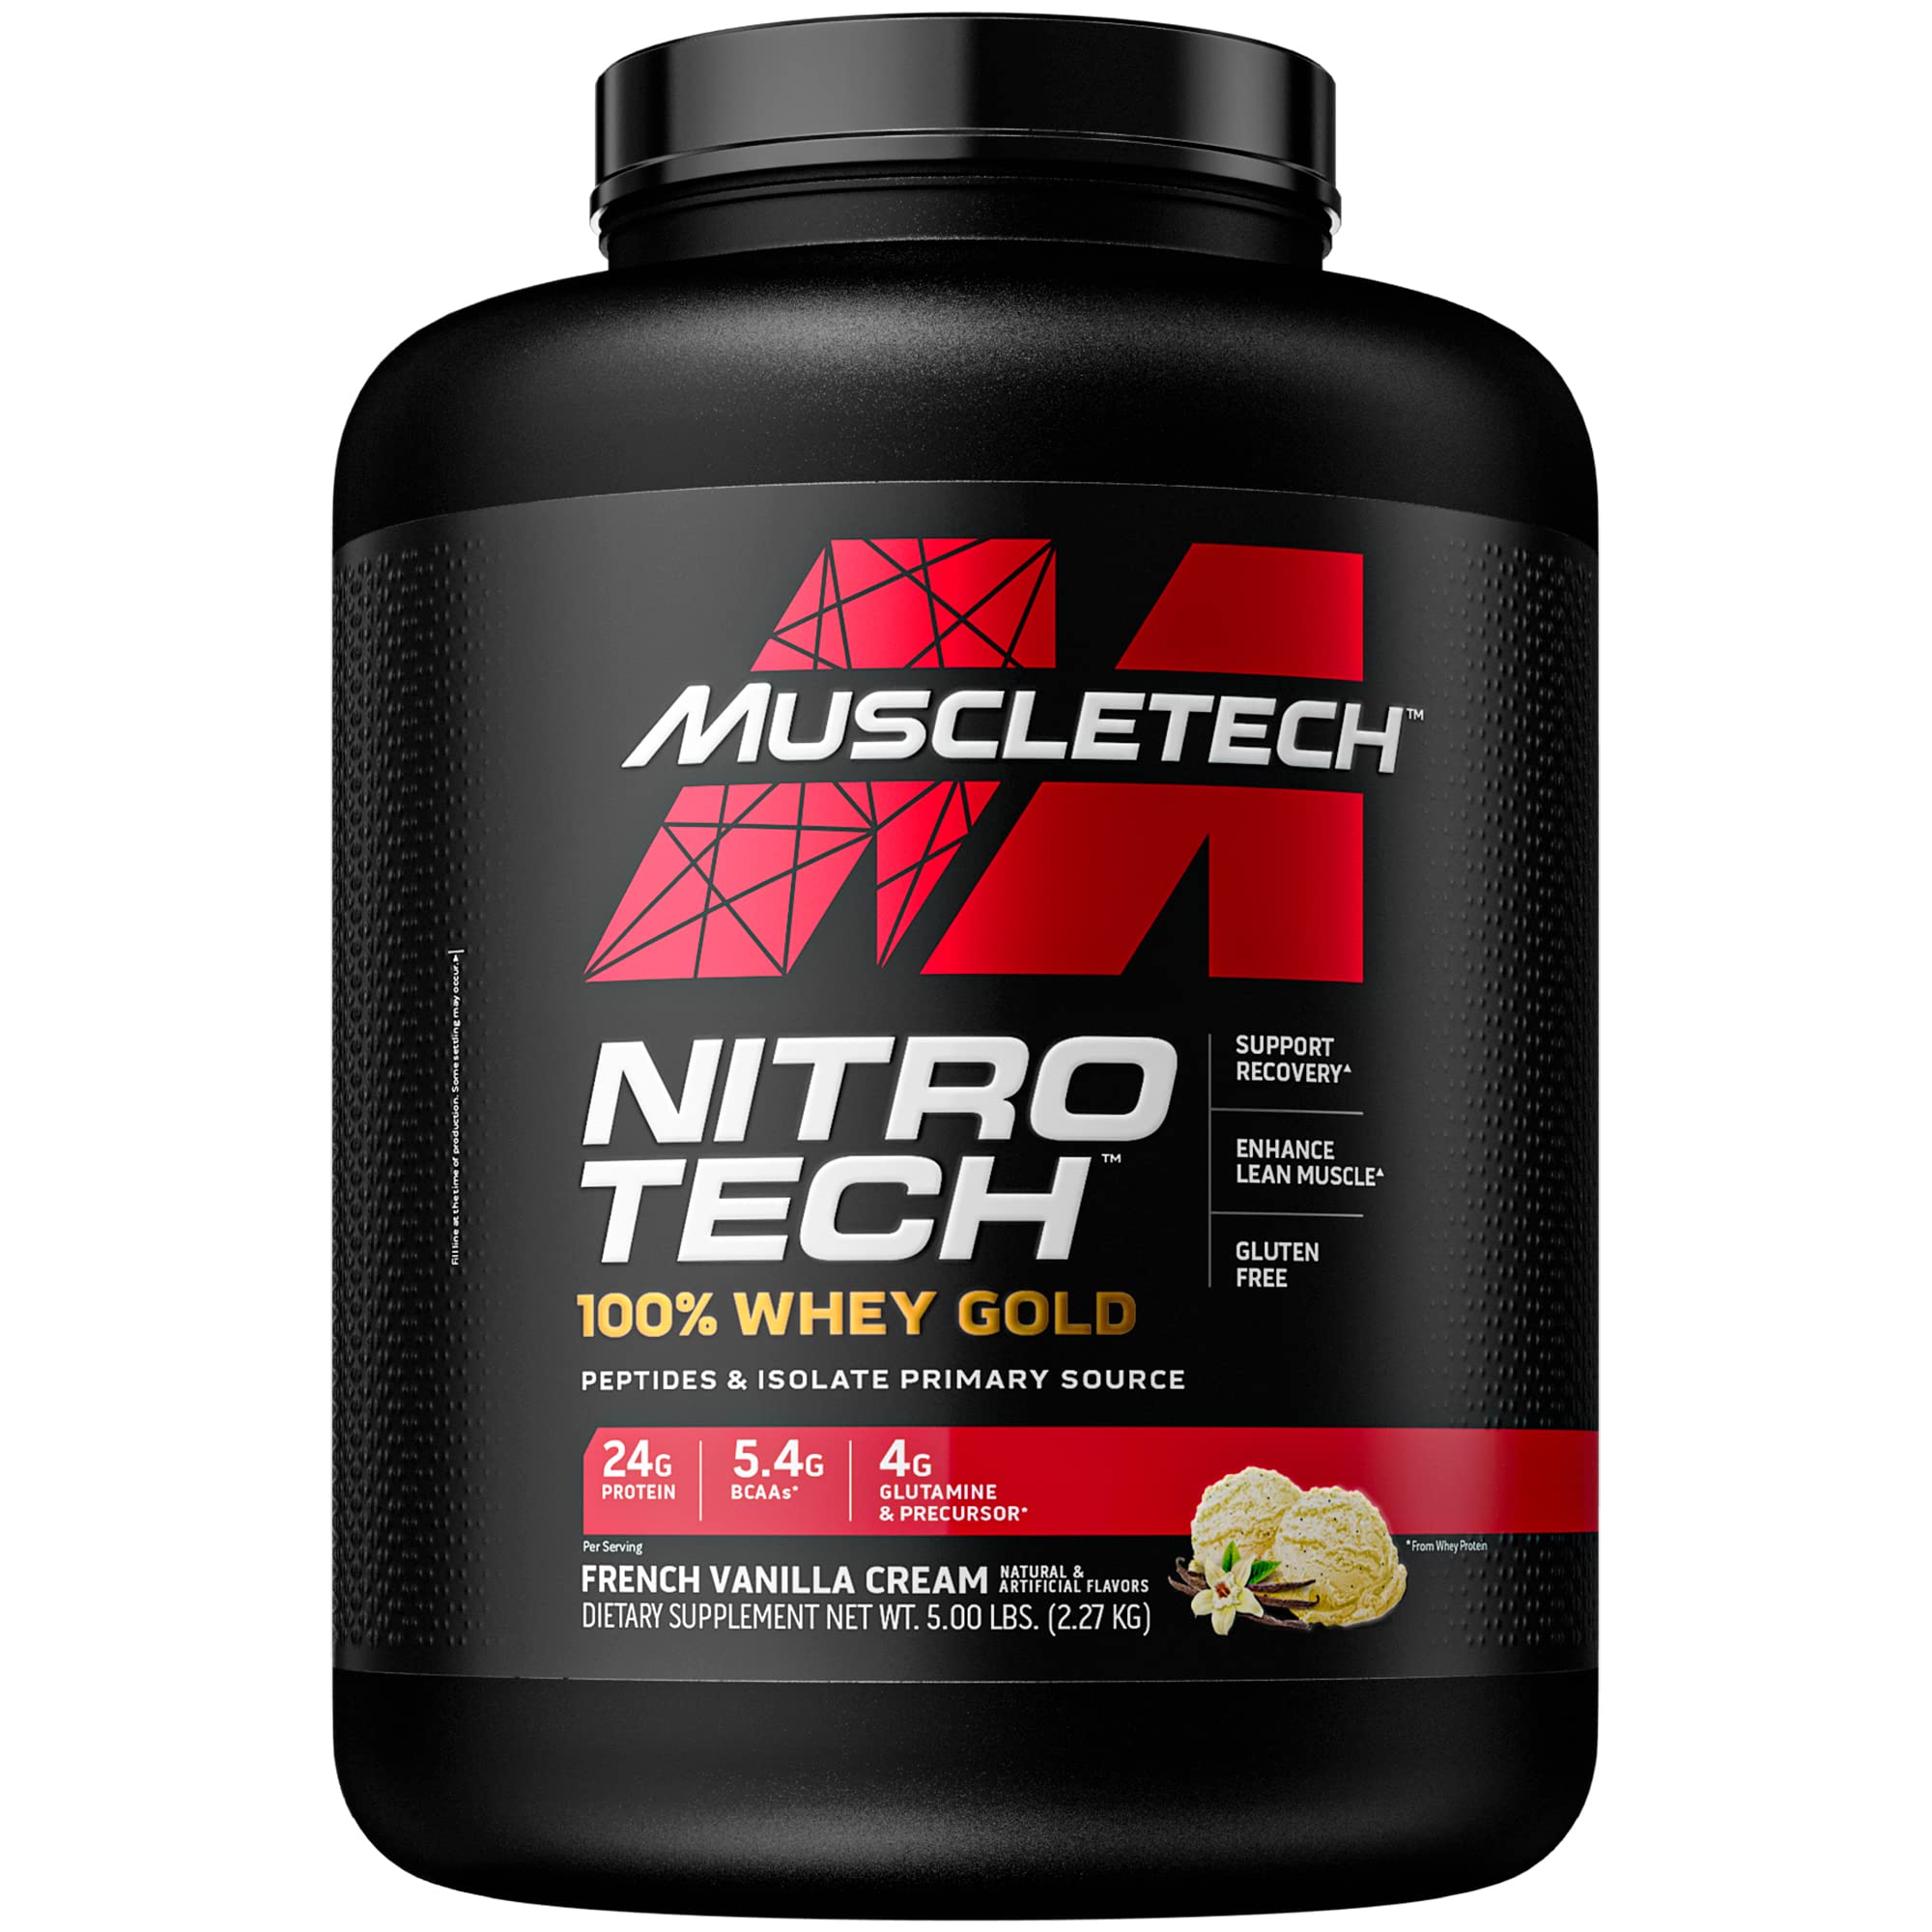 5-Lb MuscleTech Nitro-Tech 100% Whey Gold Protein Powder (Vanilla) $41.26 w/ S&S + Free Shipping